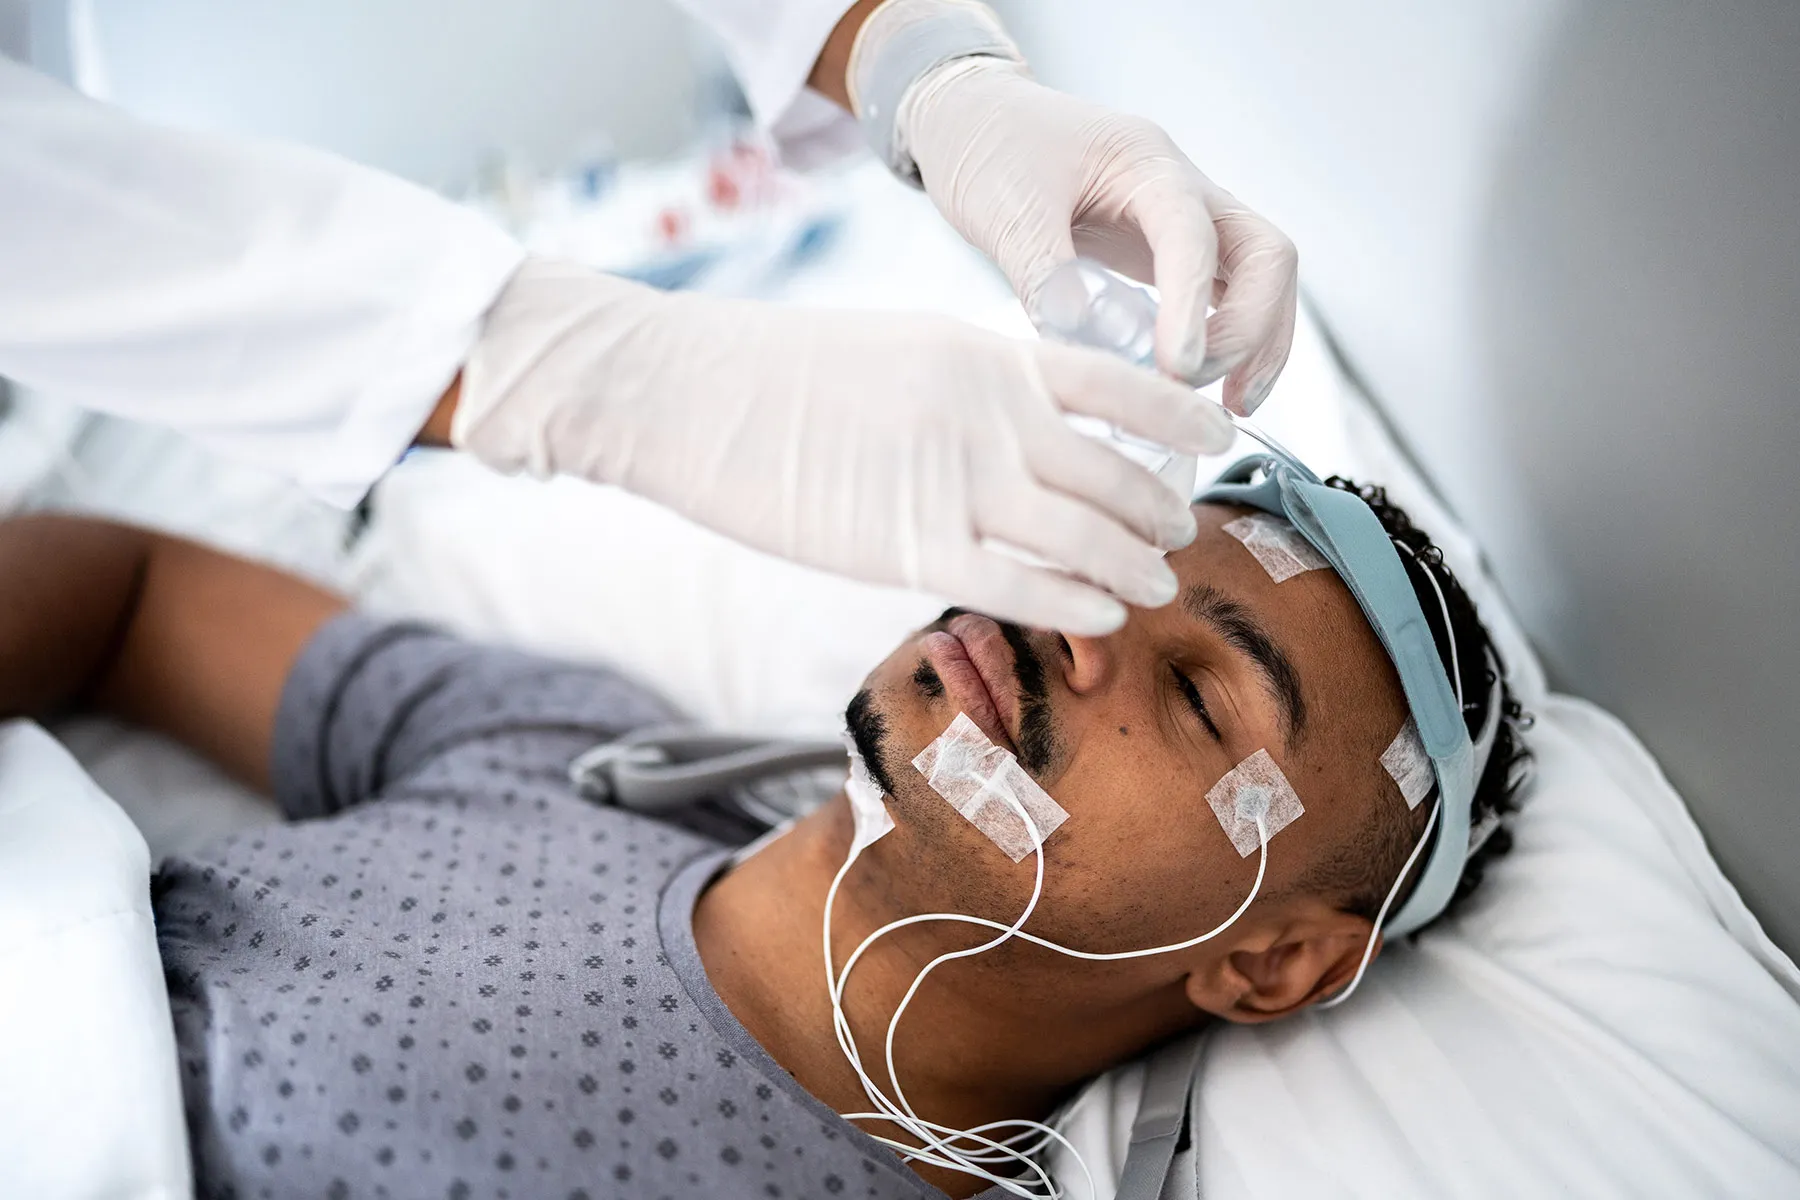 Standard Tests May Underestimate Severity of Sleep Apnea in Black Patients 